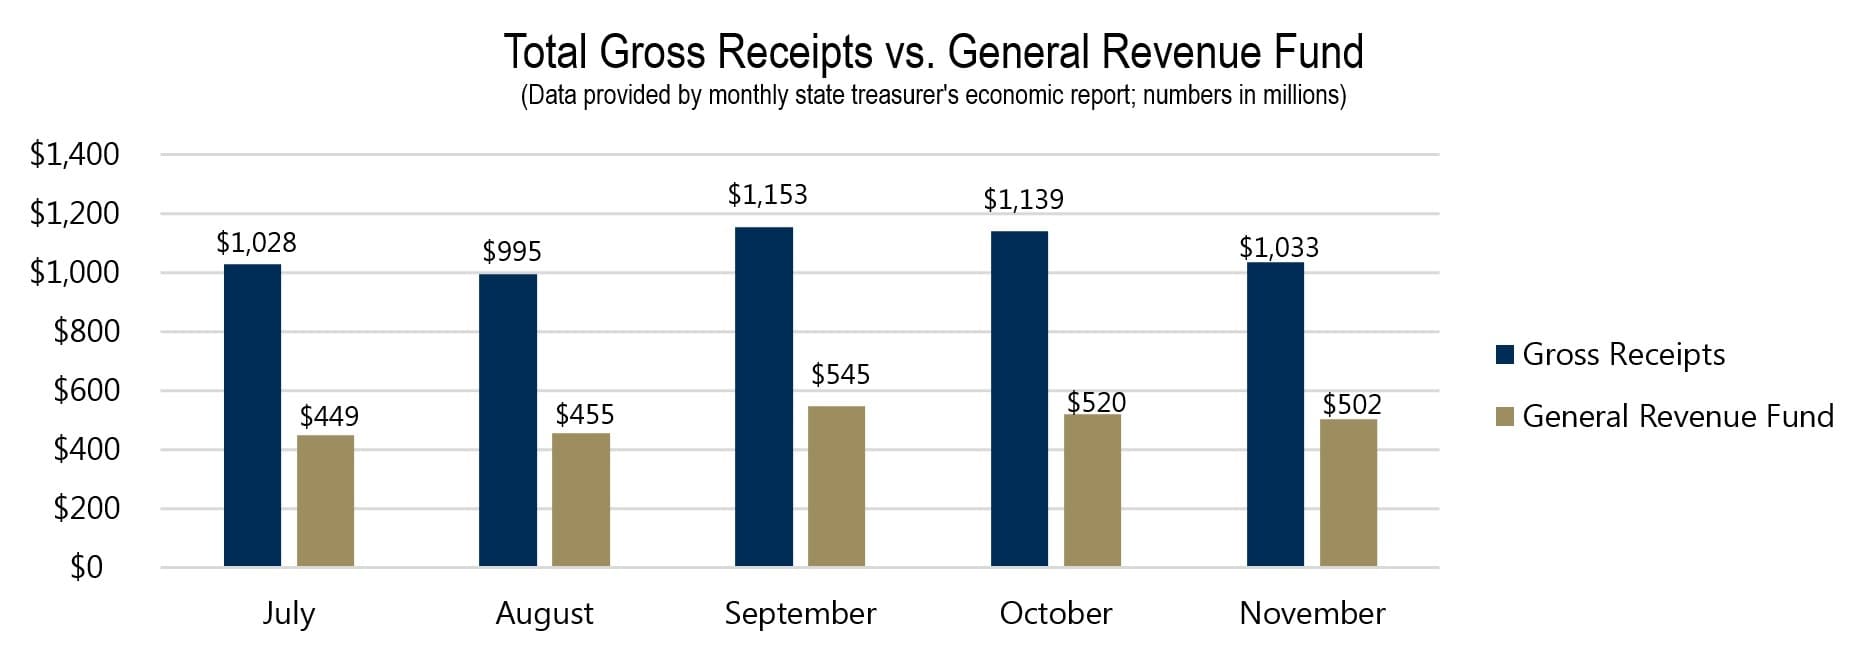 Total Gross Receipts vs. General Revenue Fund